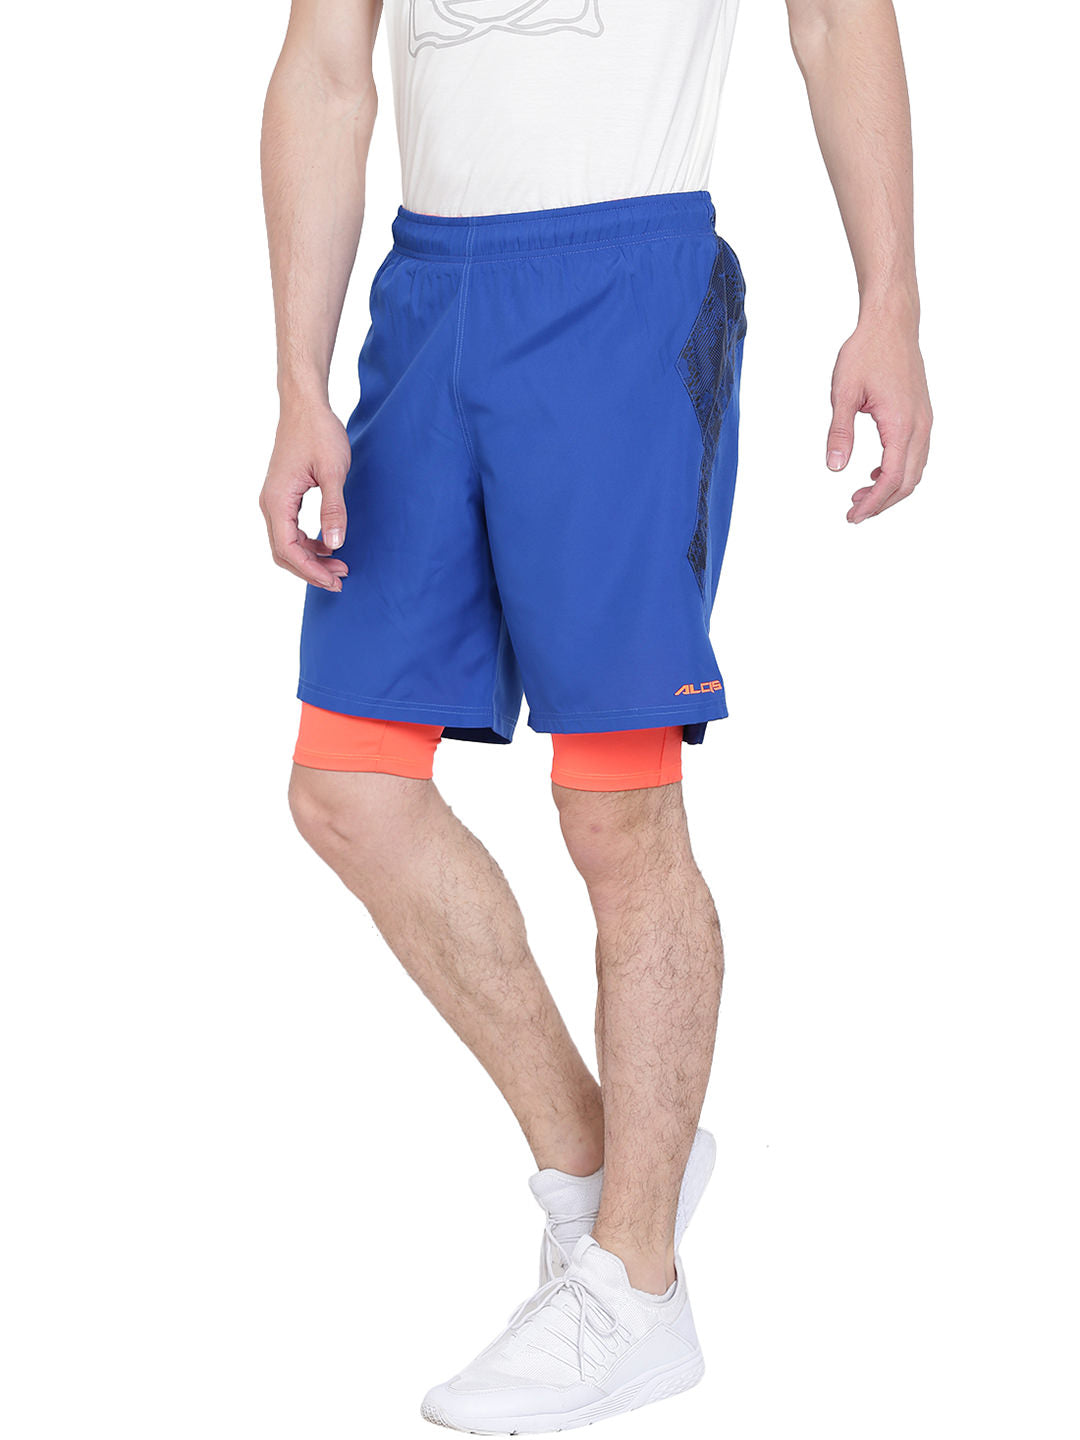 Alcis Men's Solid Navy Blue Shorts